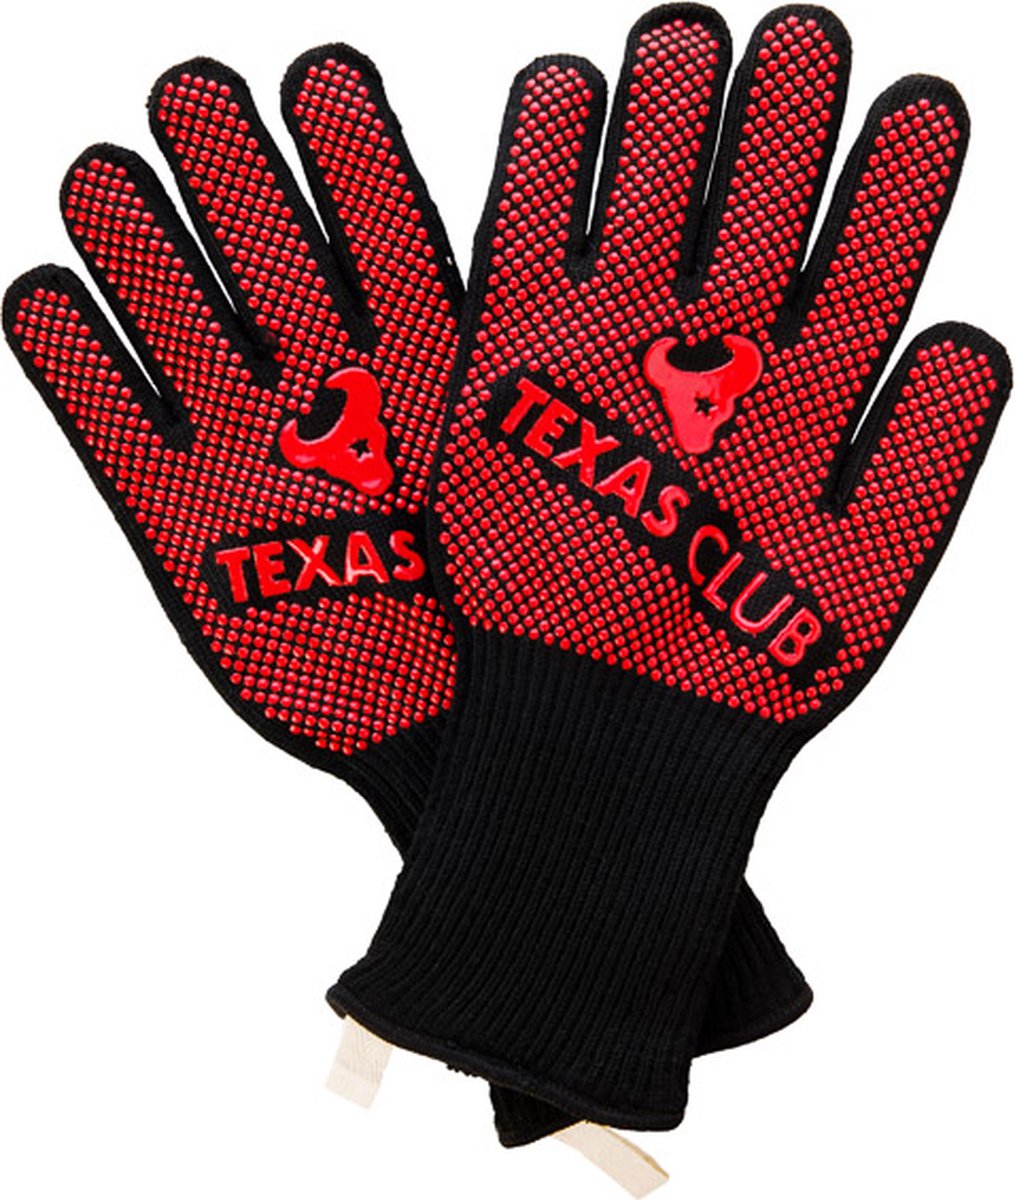 Texas Club - Hittebestendige handschoenen - Texas Club